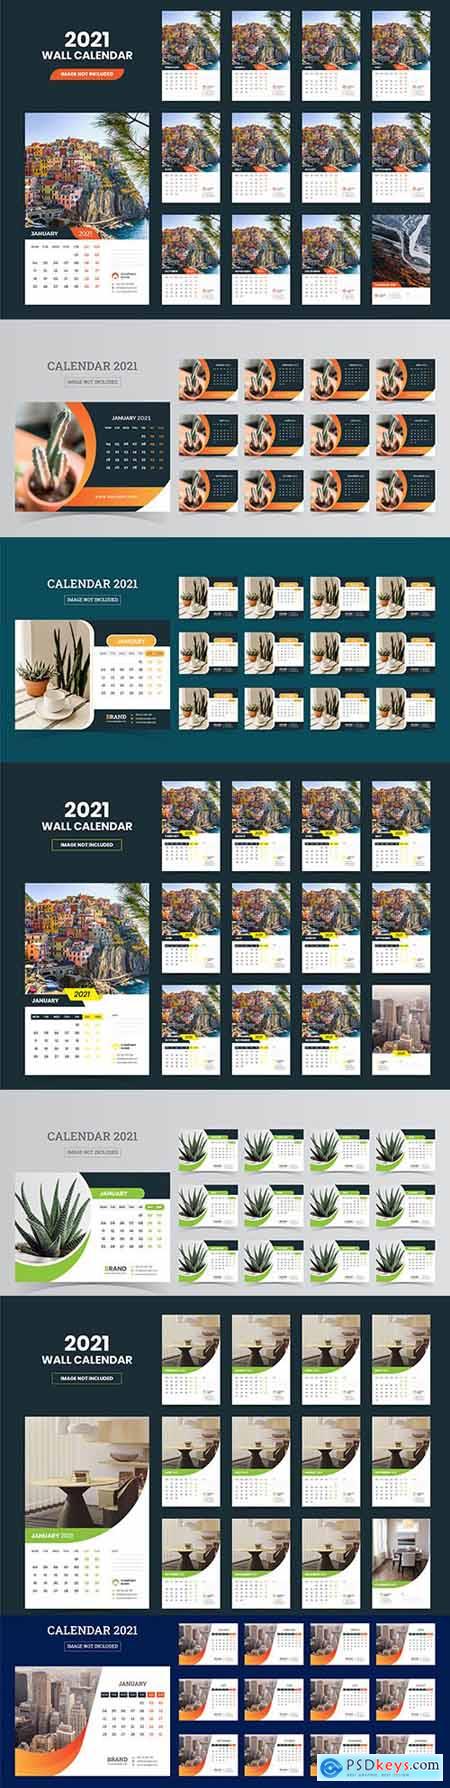 Desktop calendar for 2021 with decorative photos